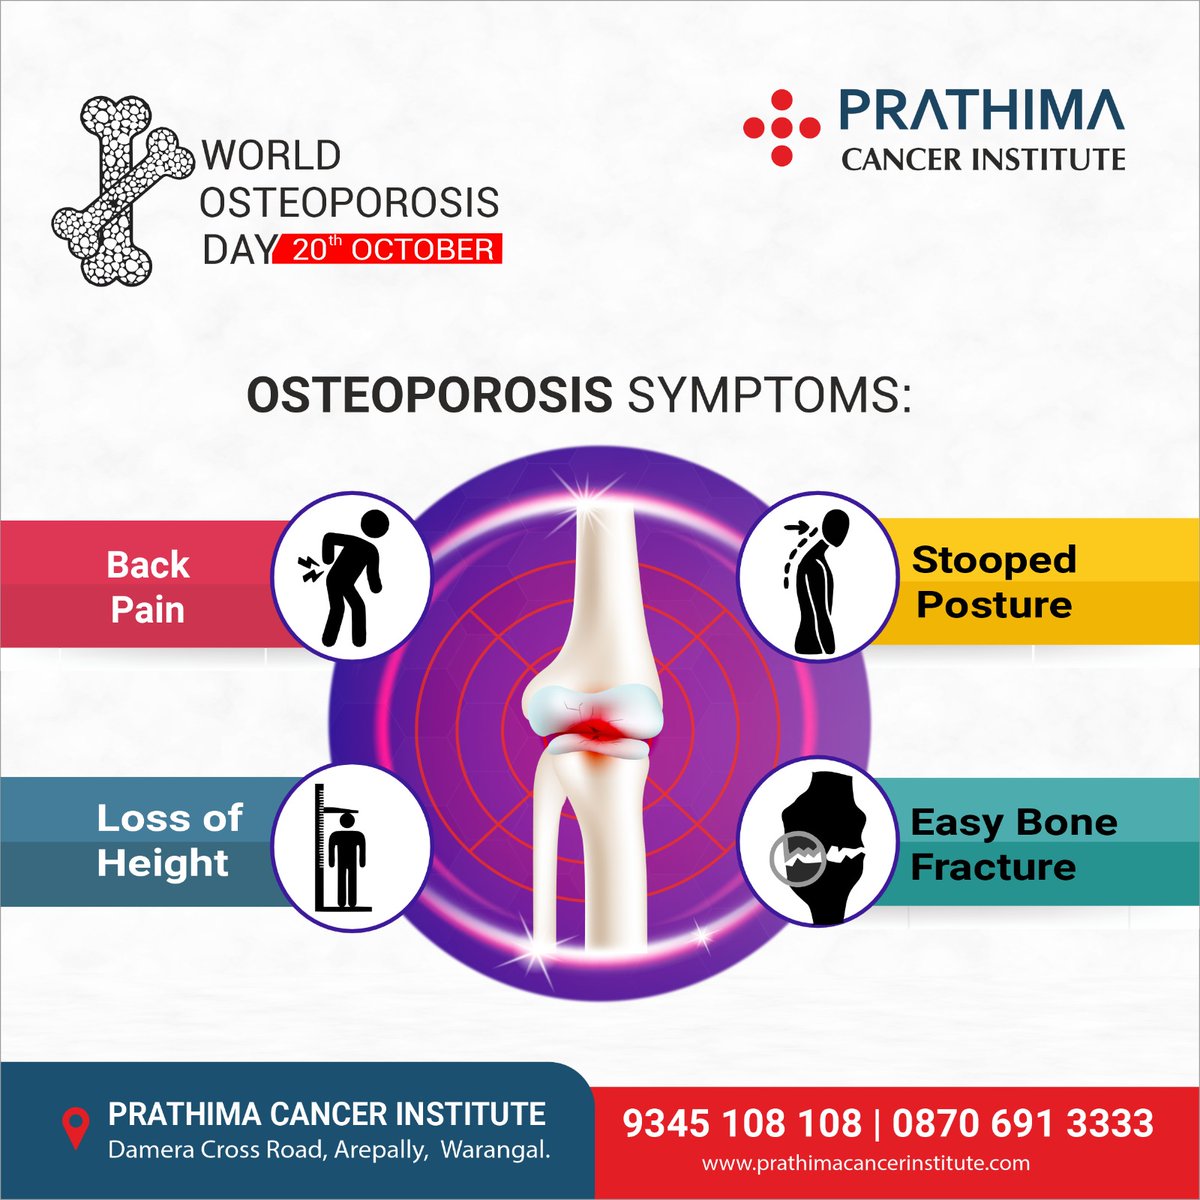 OSTEOPOROSIS SYMPTOMS:
• Back Pain
• Loss of Height
• Stooped Posture
• Easy Bone

#OsteoporosisDay #BoneHealth #StrongBones #PreventOsteoporosis #HealthyAging #FracturePrevention #BonesMatter #CalciumIntake #OsteoporosisAwareness #prathimacancerinstitute #prathima #PCI